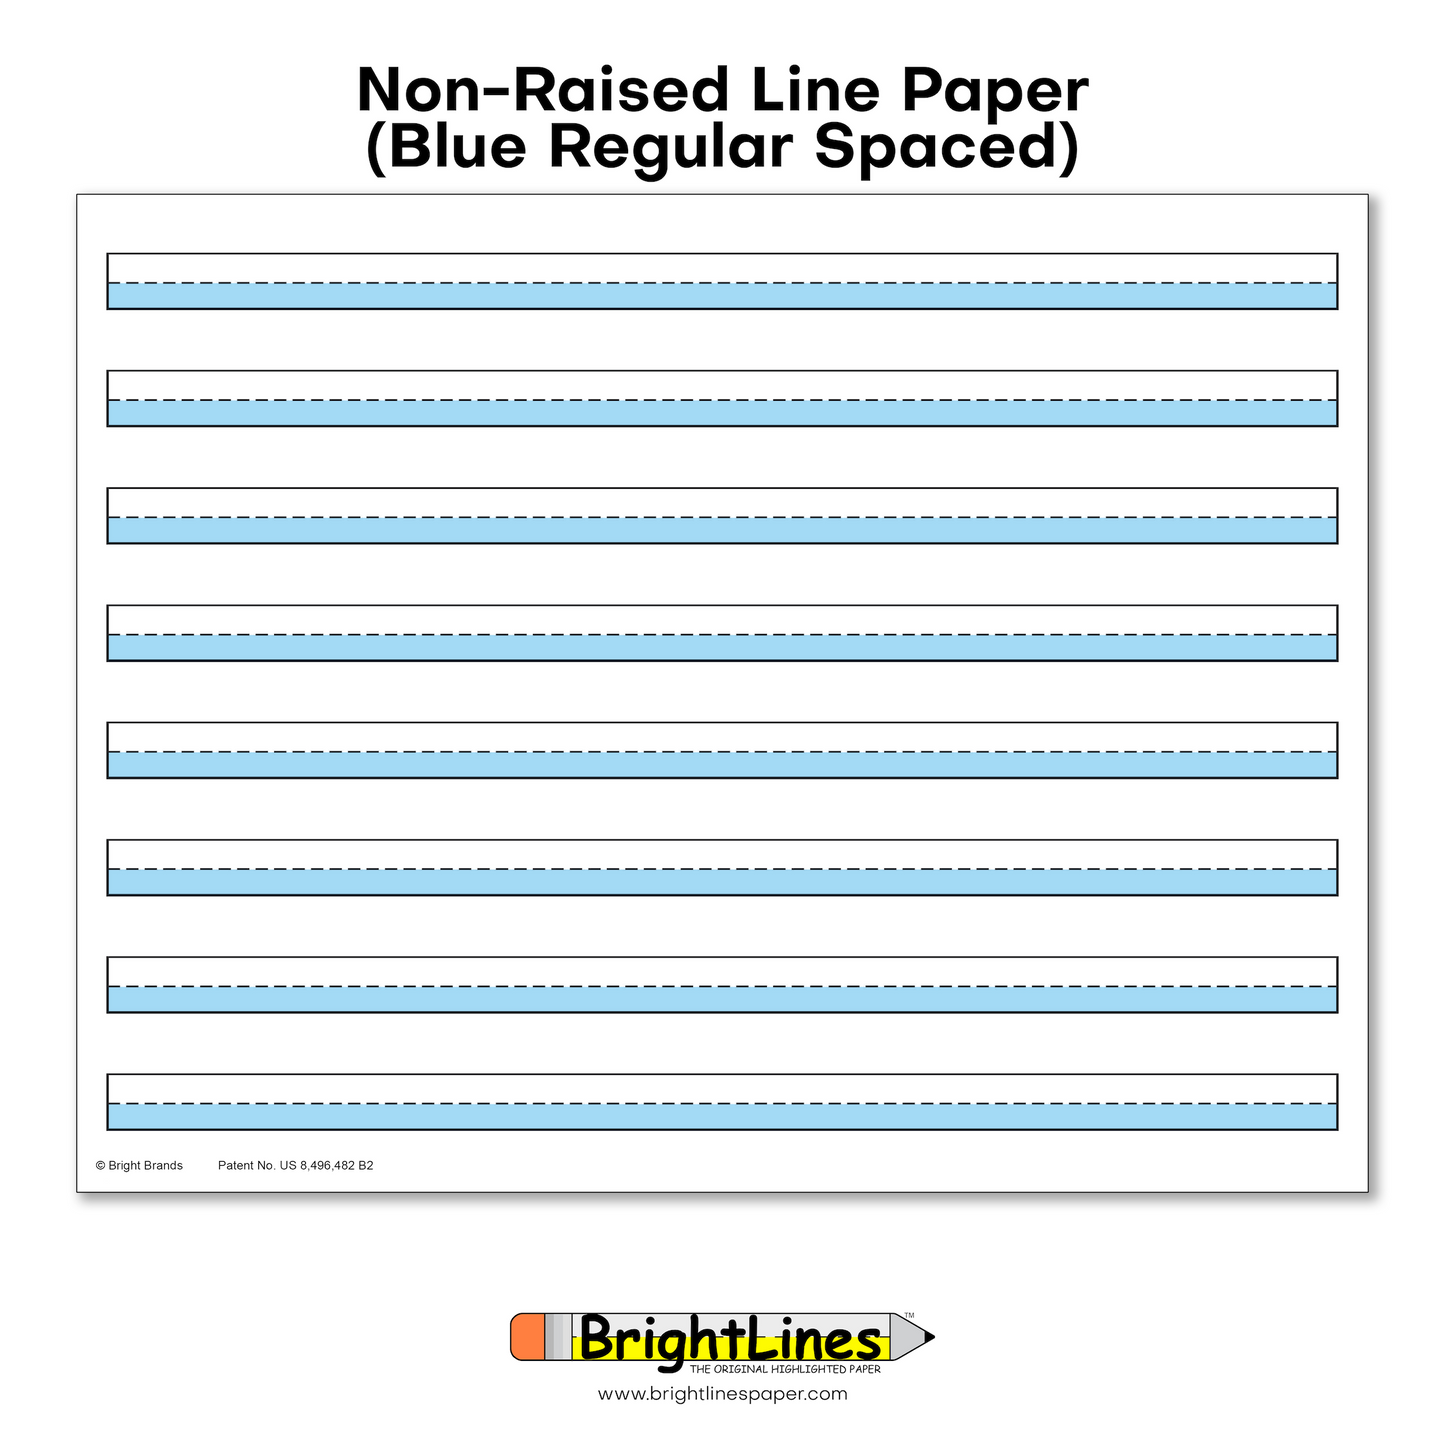 BrightLines - Standard Line Paper